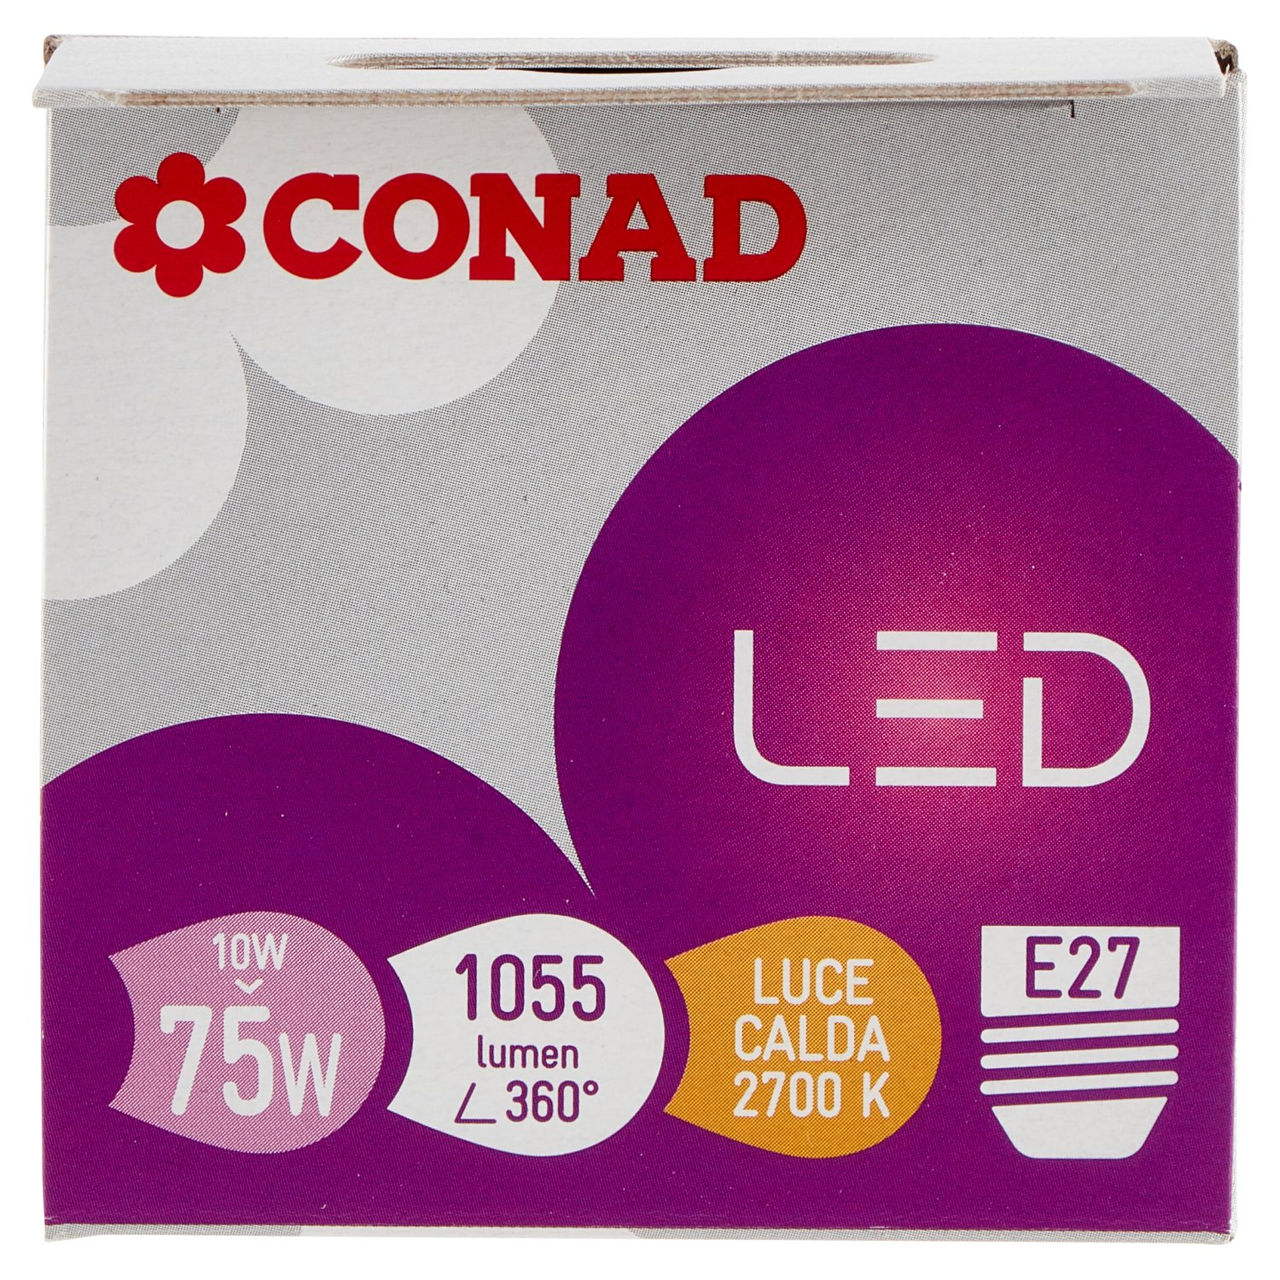 CONAD Led 10W 1055 Lumen E27 Luce Calda